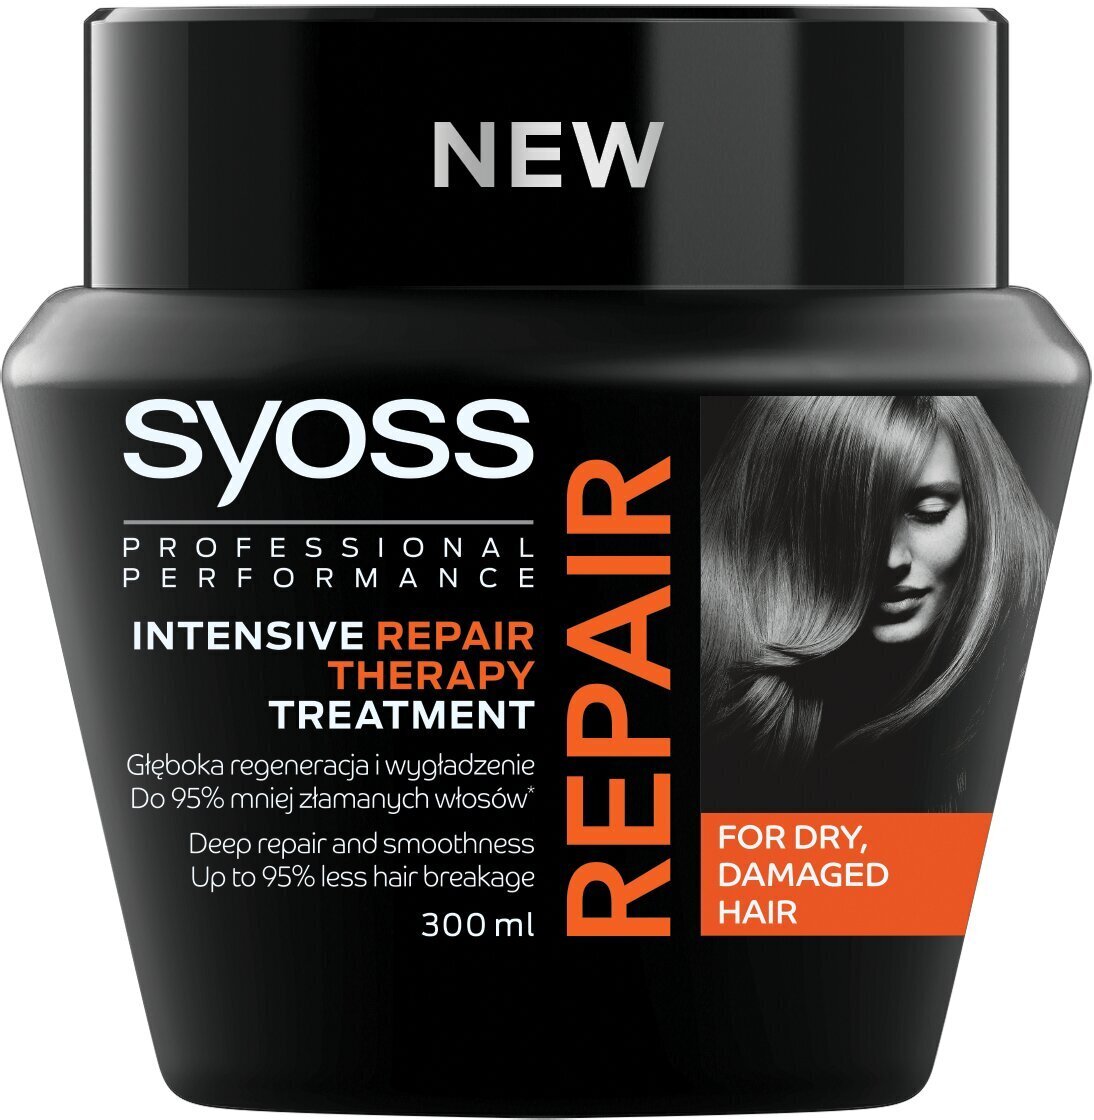 Маска для волос syoss repair therapy